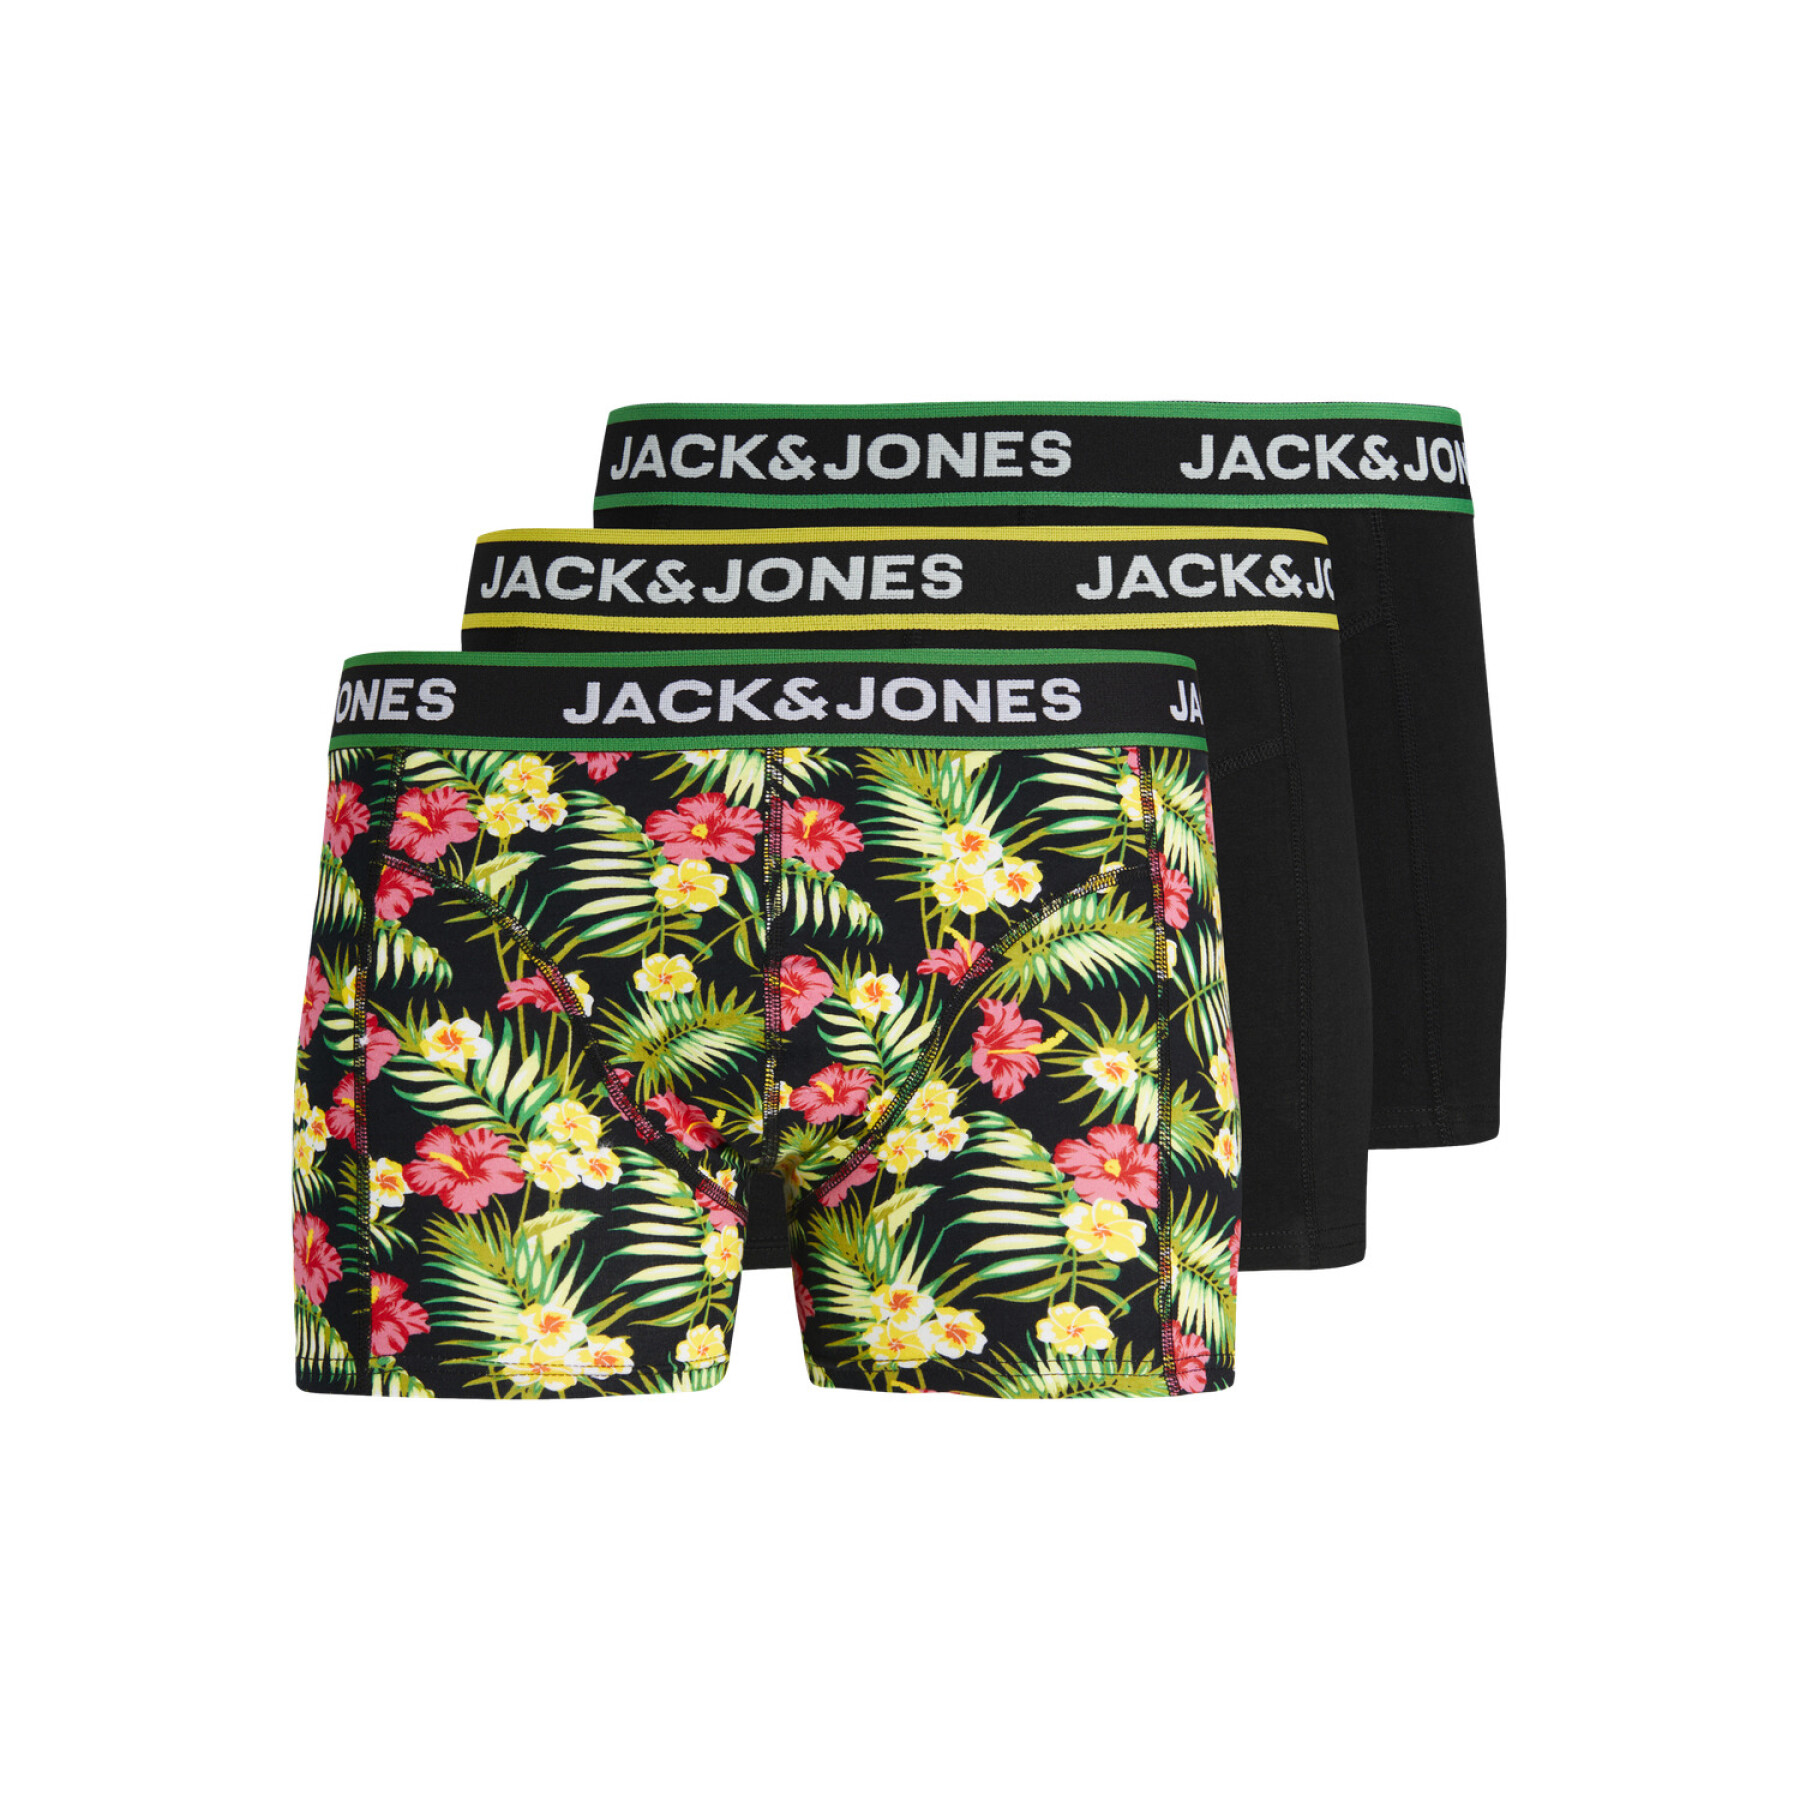 Calzoncillos para niños Jack & Jones Pink Flowers (x3)